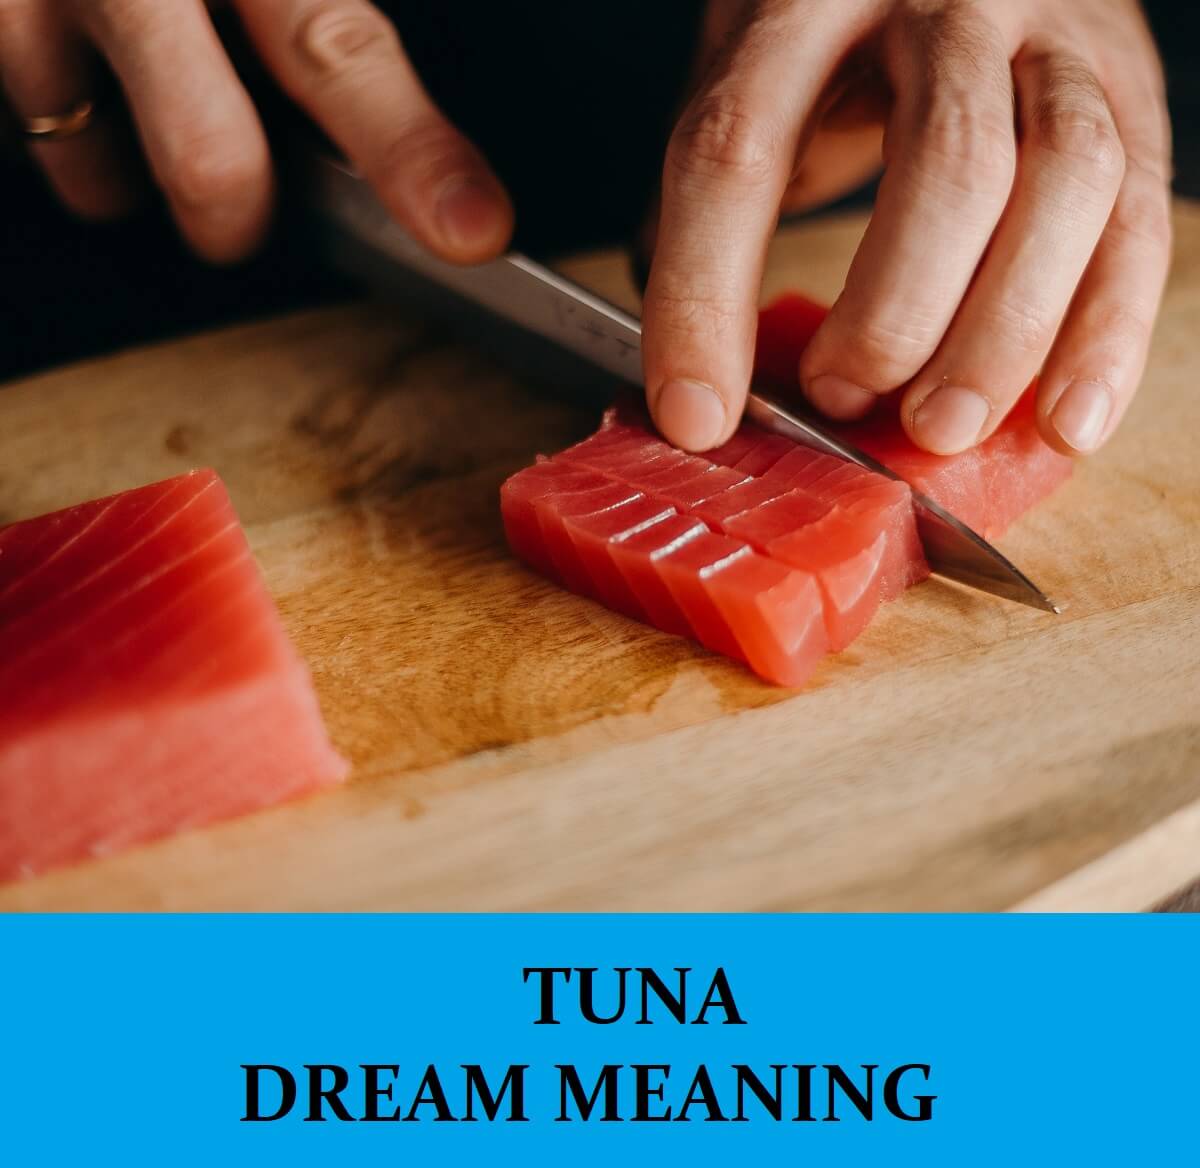 Dream About Tuna